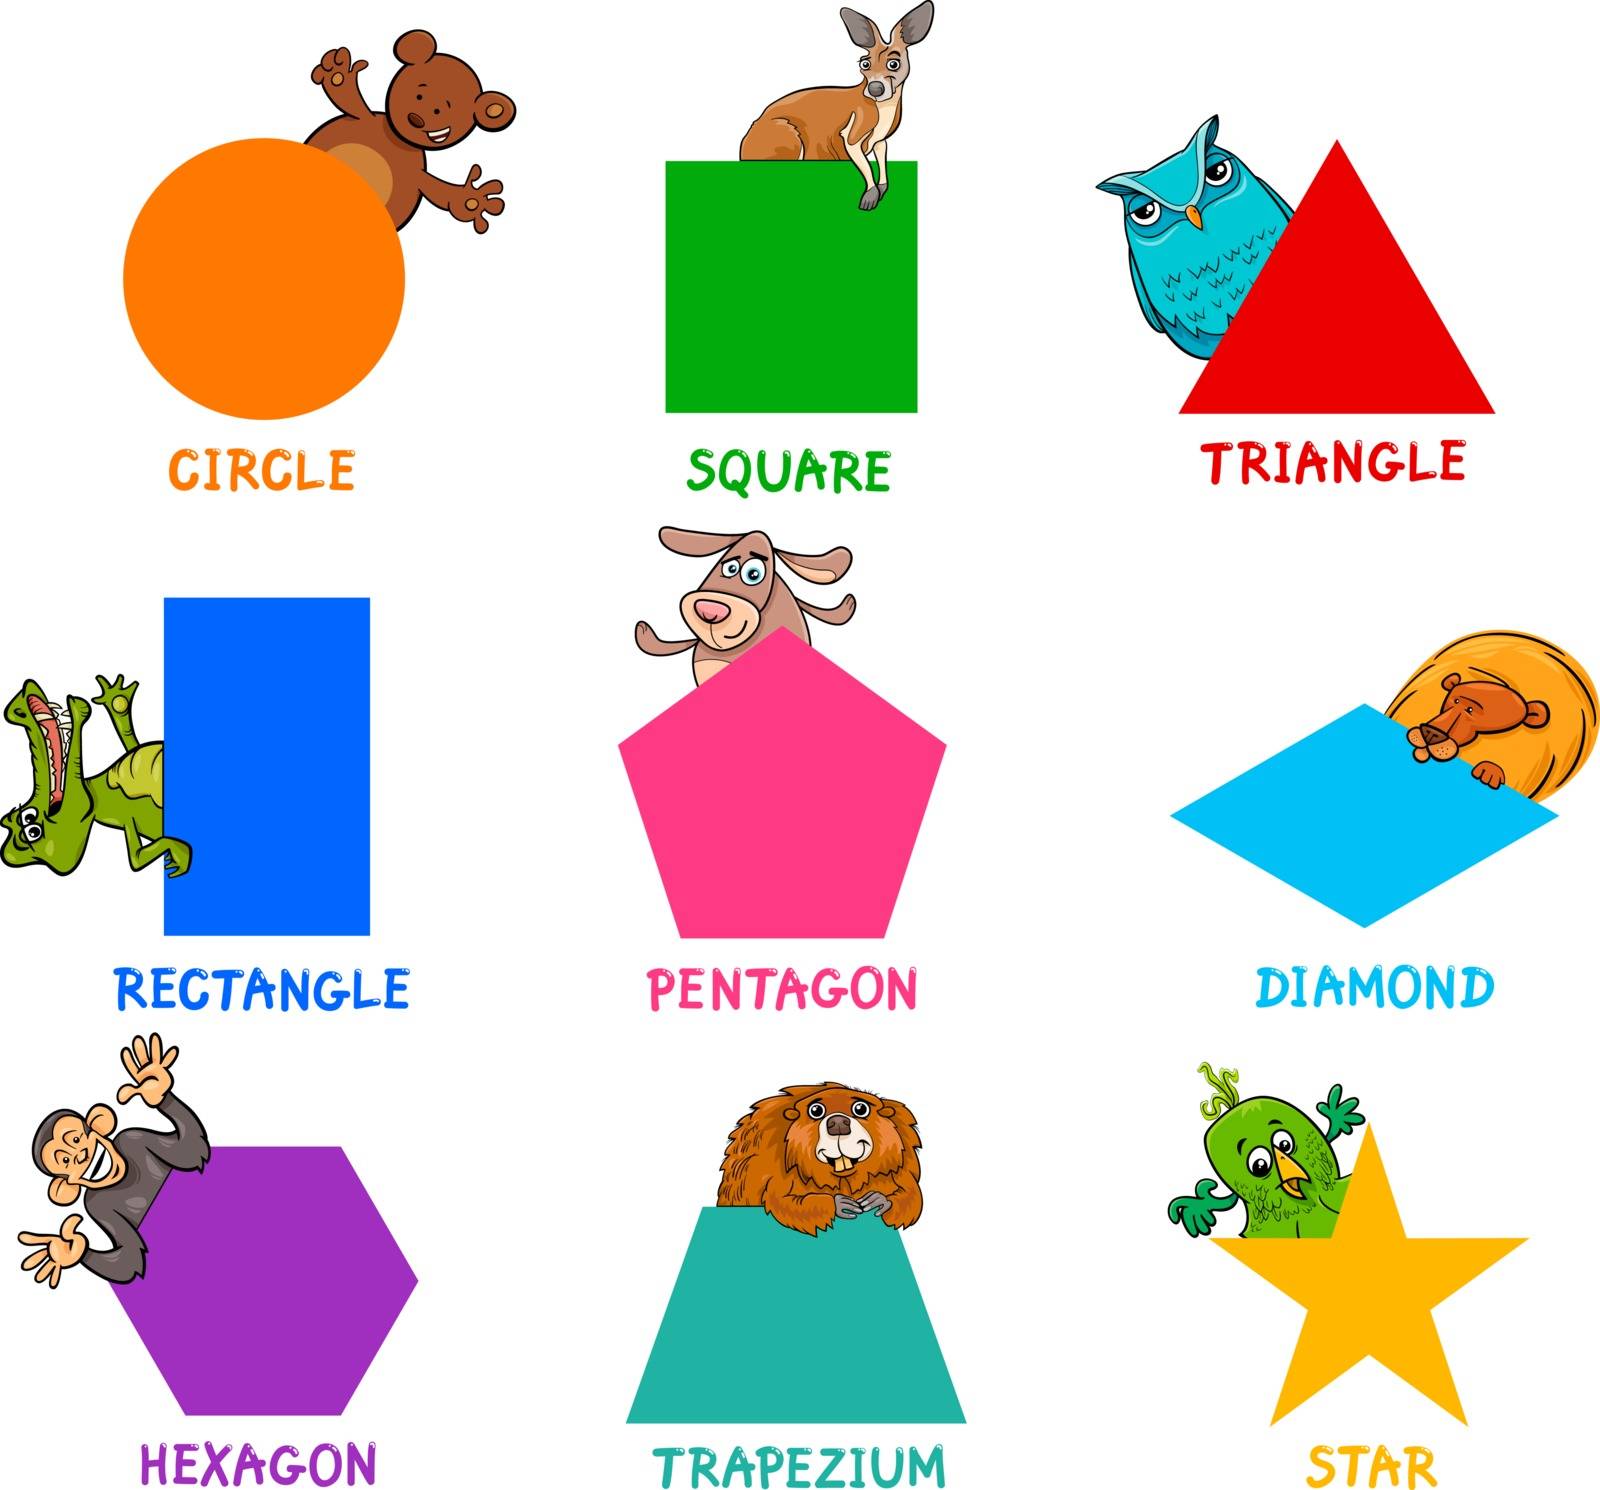 geometric shapes with animal characters by izakowski